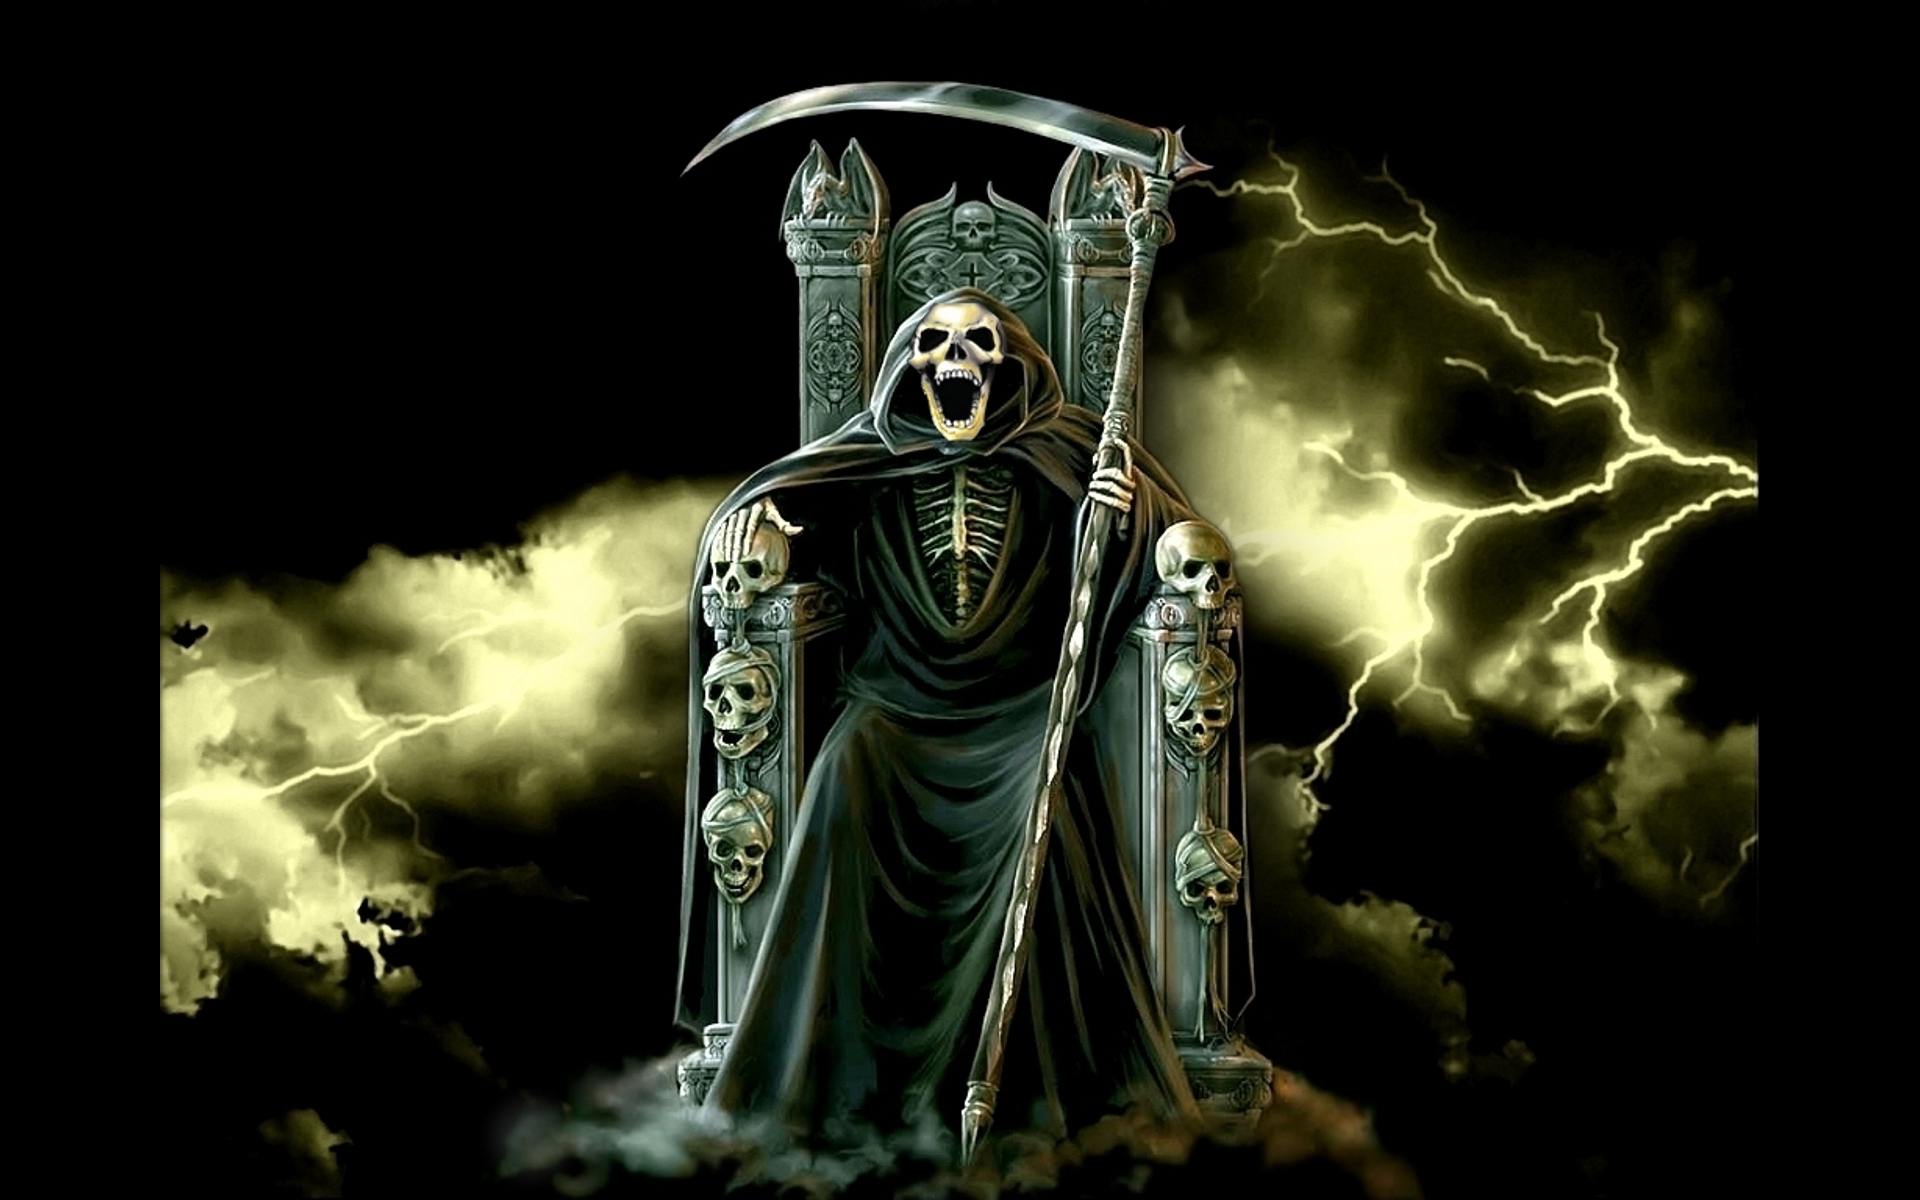 The Exorcist Grim Reaper - The Exorcist Wallpaper 34302961 - Fanpop